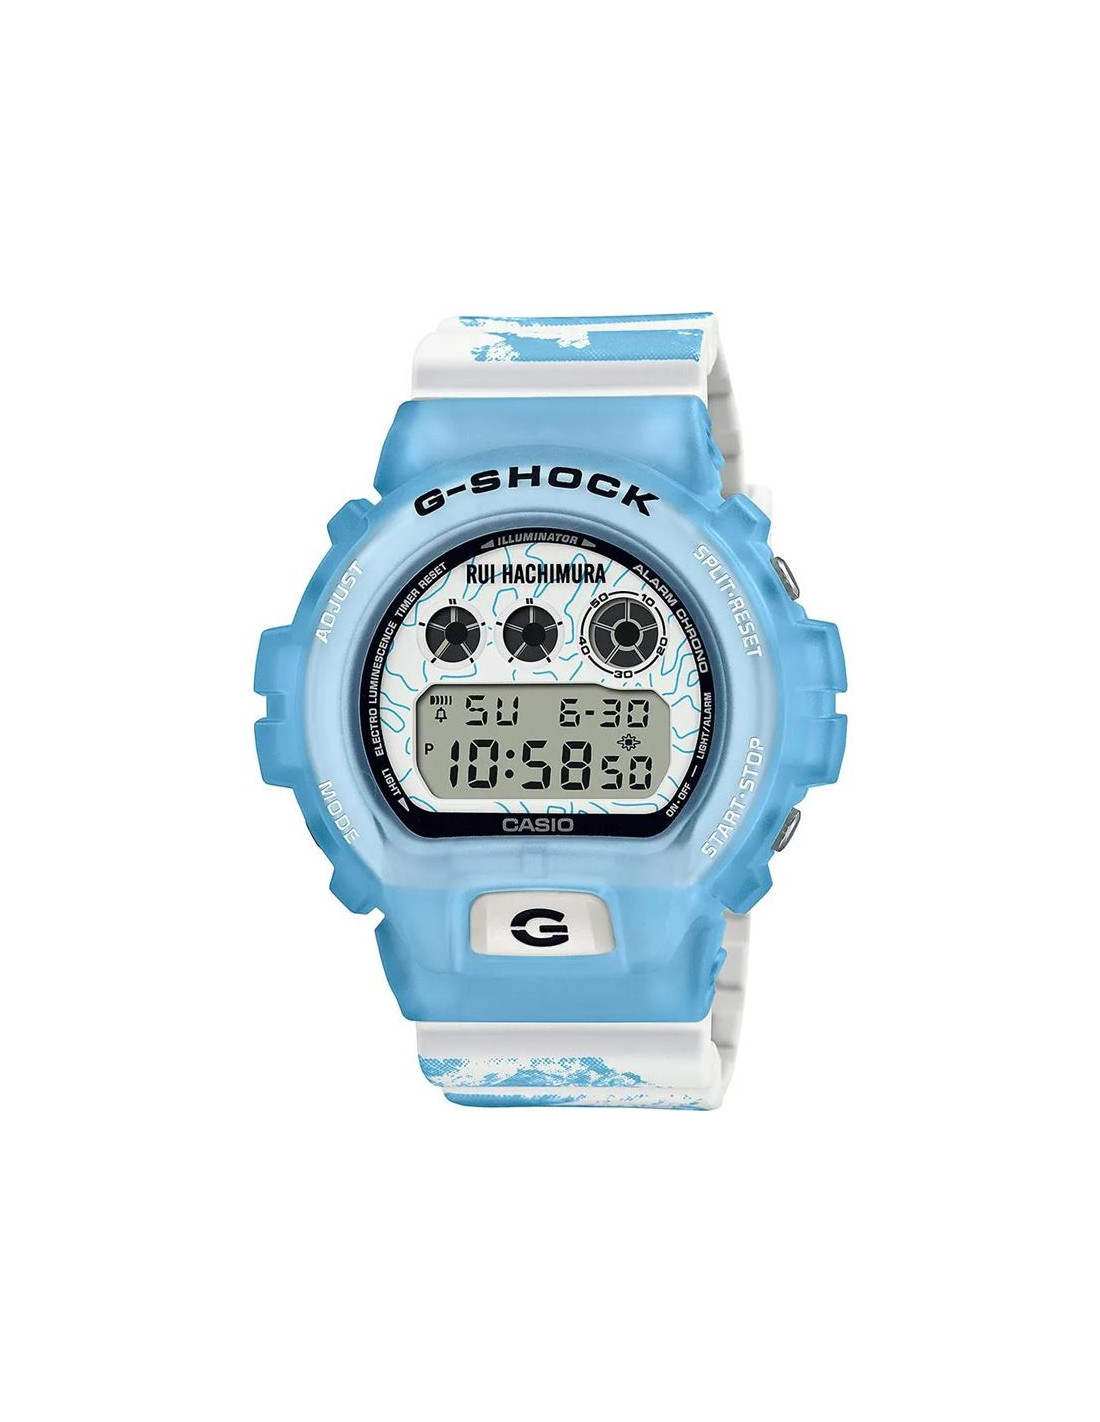 Reloj casio g-shock digital 6900 rui hachimura azul